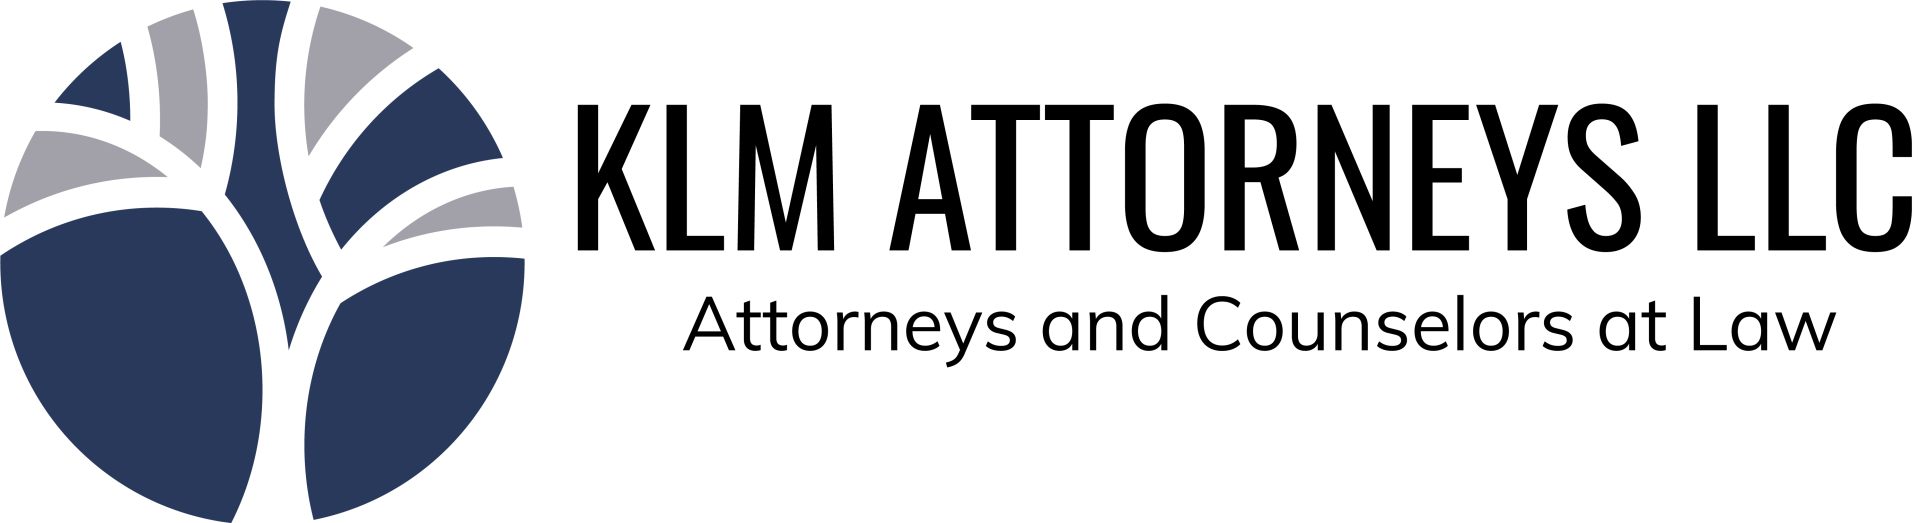 KLM Attorneys LLC Logo